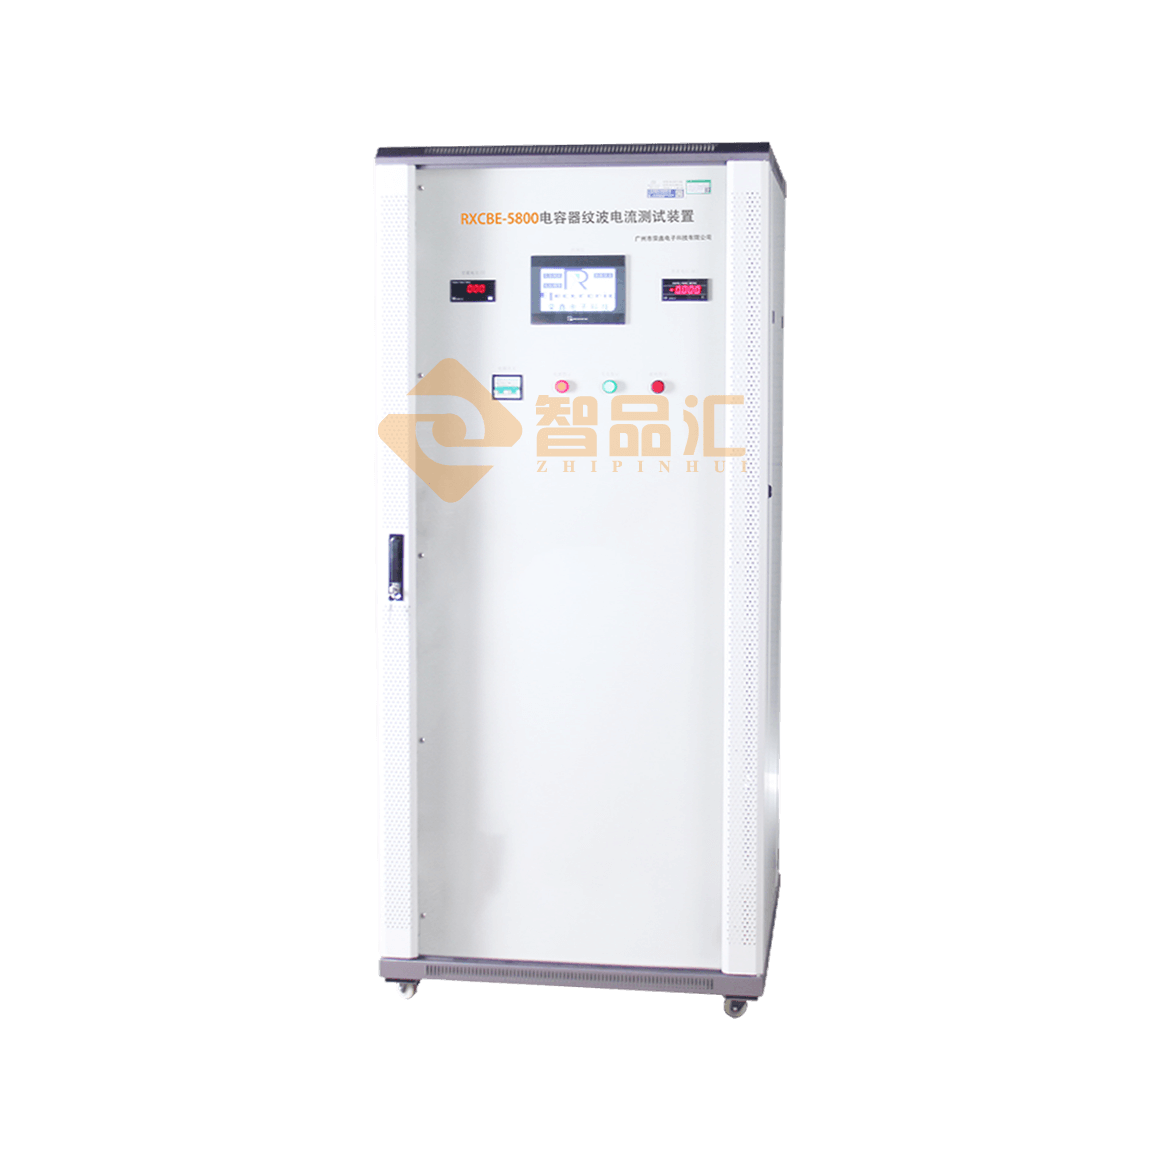 RXCBE-5800电容器纹波电流测试装置右侧面大.png